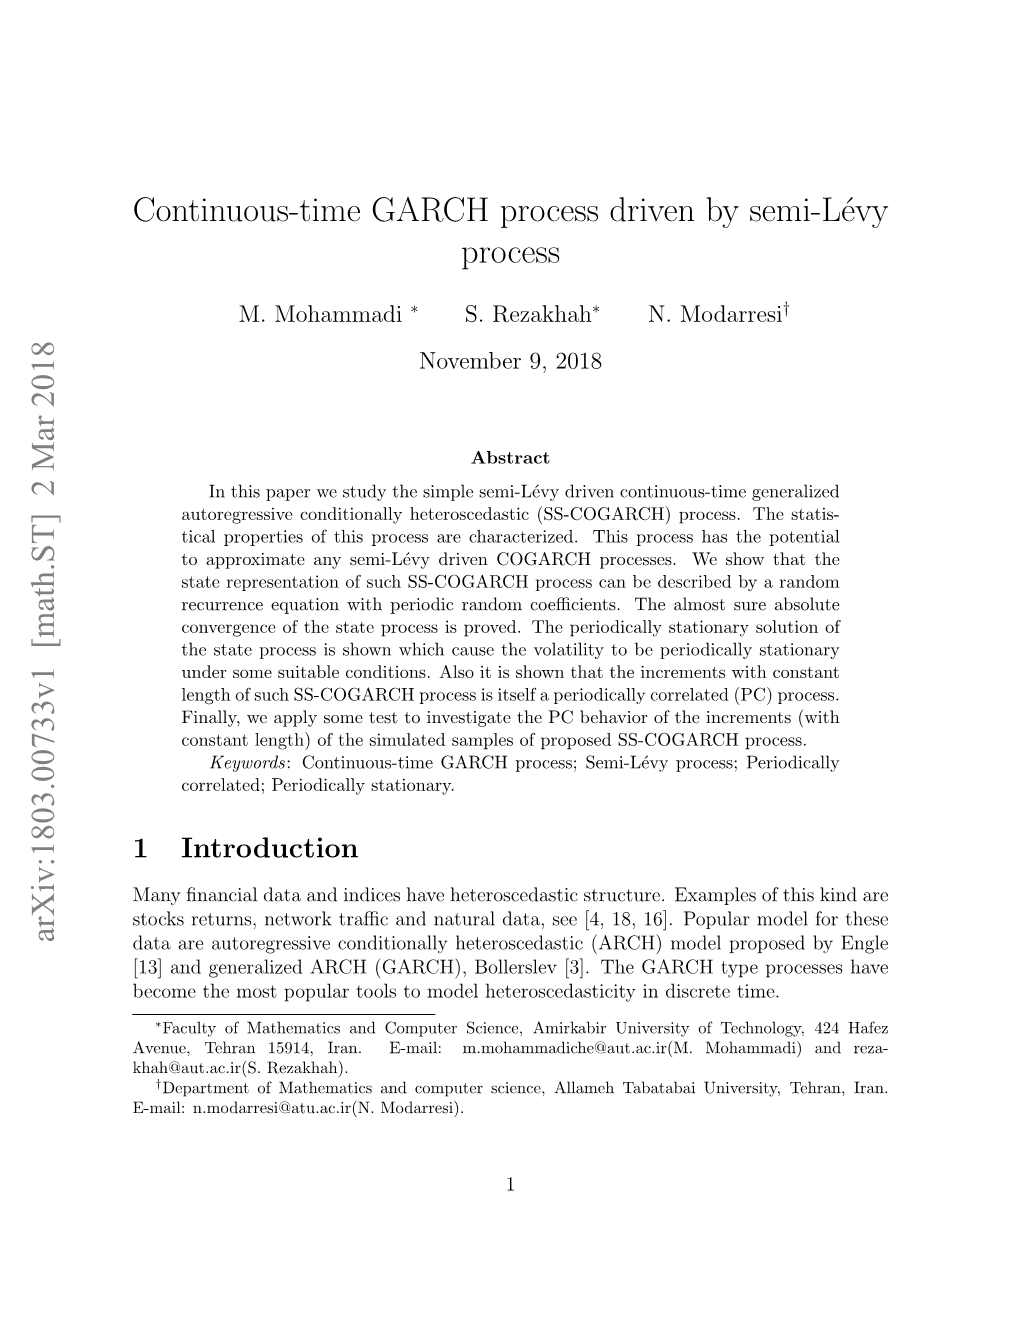 Continuous-Time GARCH Process Driven by Semi-Lévy Process Arxiv